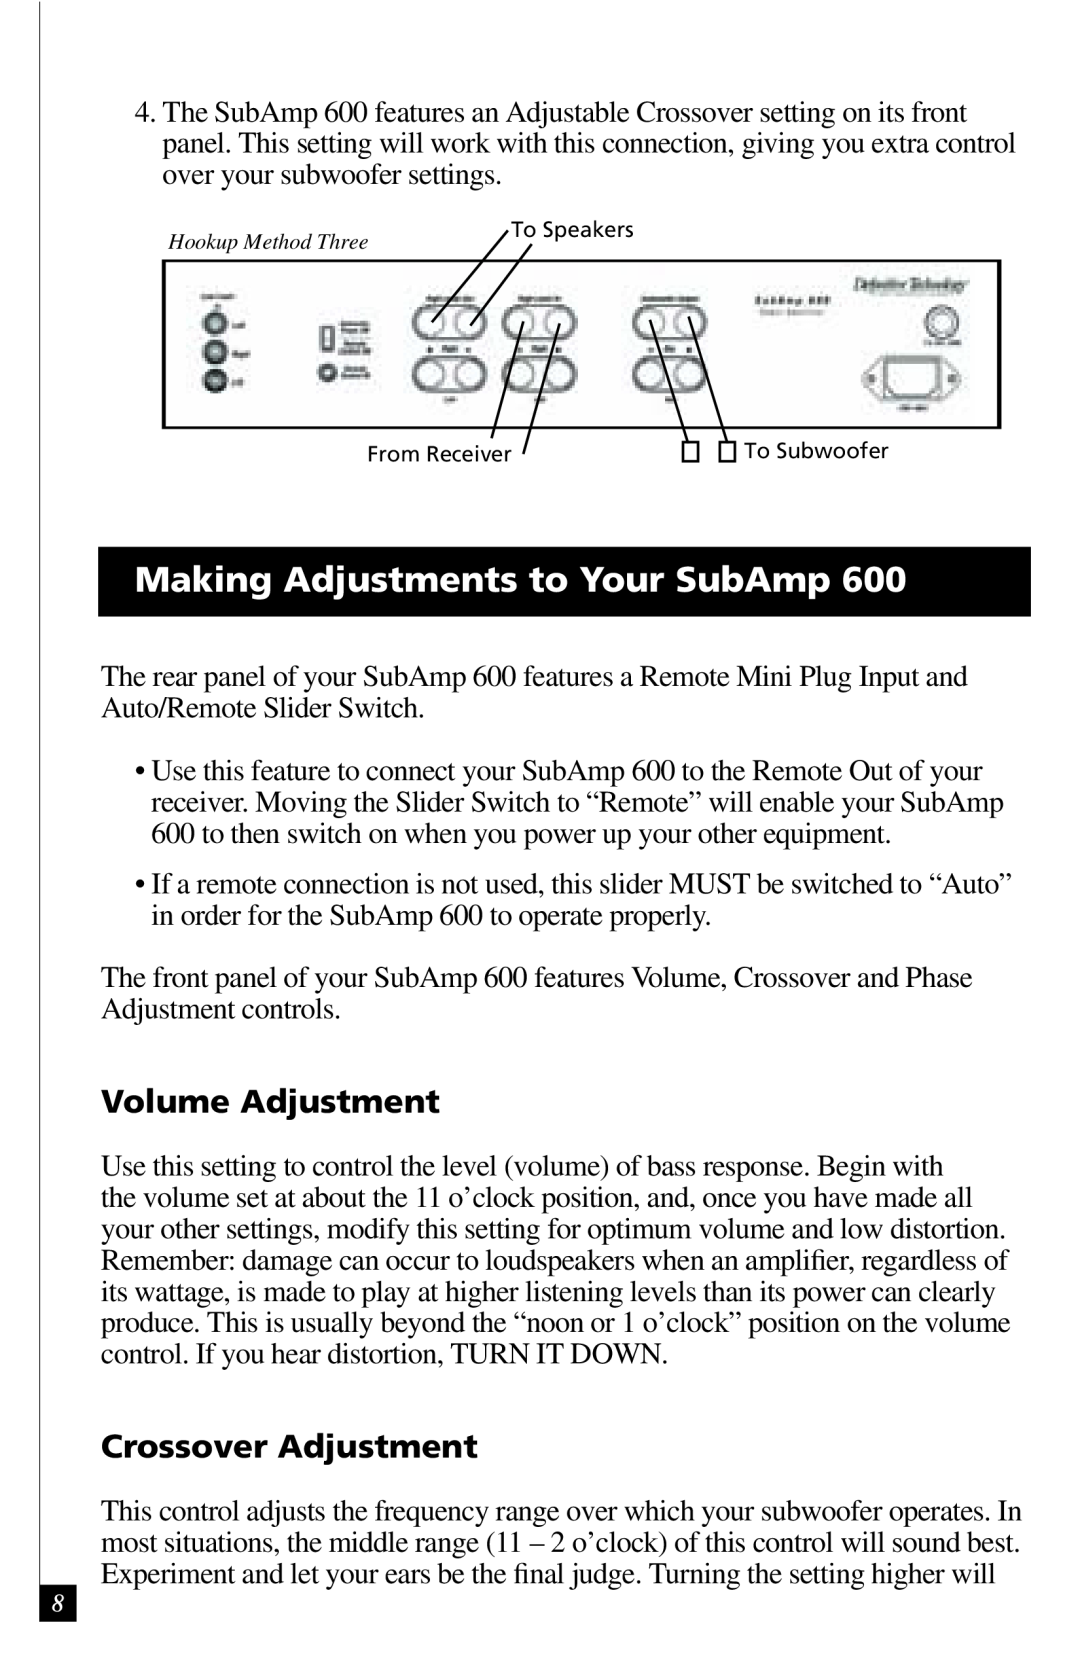 Definitive Technology 600 owner manual Making Adjustments to Your SubAmp, Volume Adjustment, Crossover Adjustment 